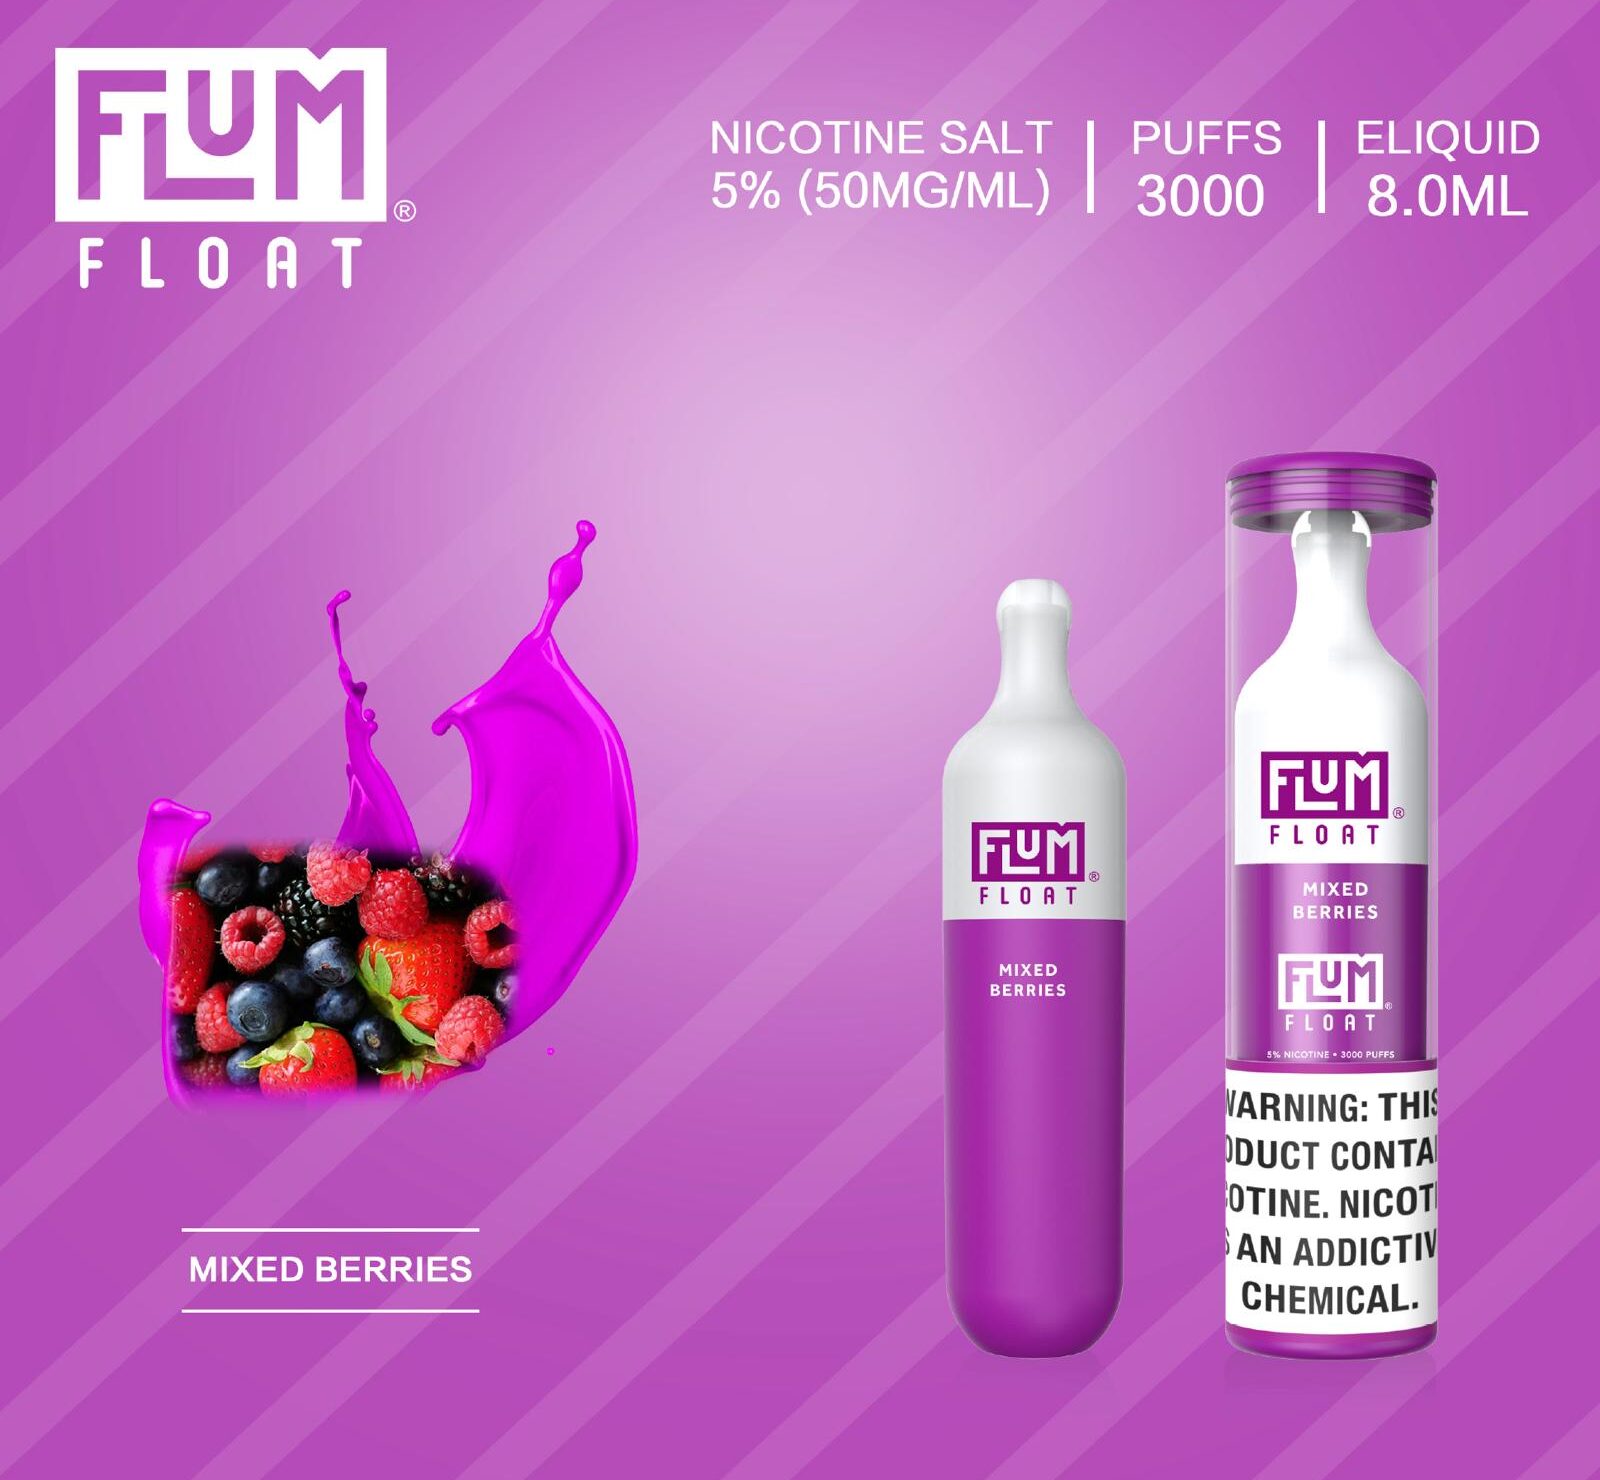 Flum_Float_Mixed_Berries